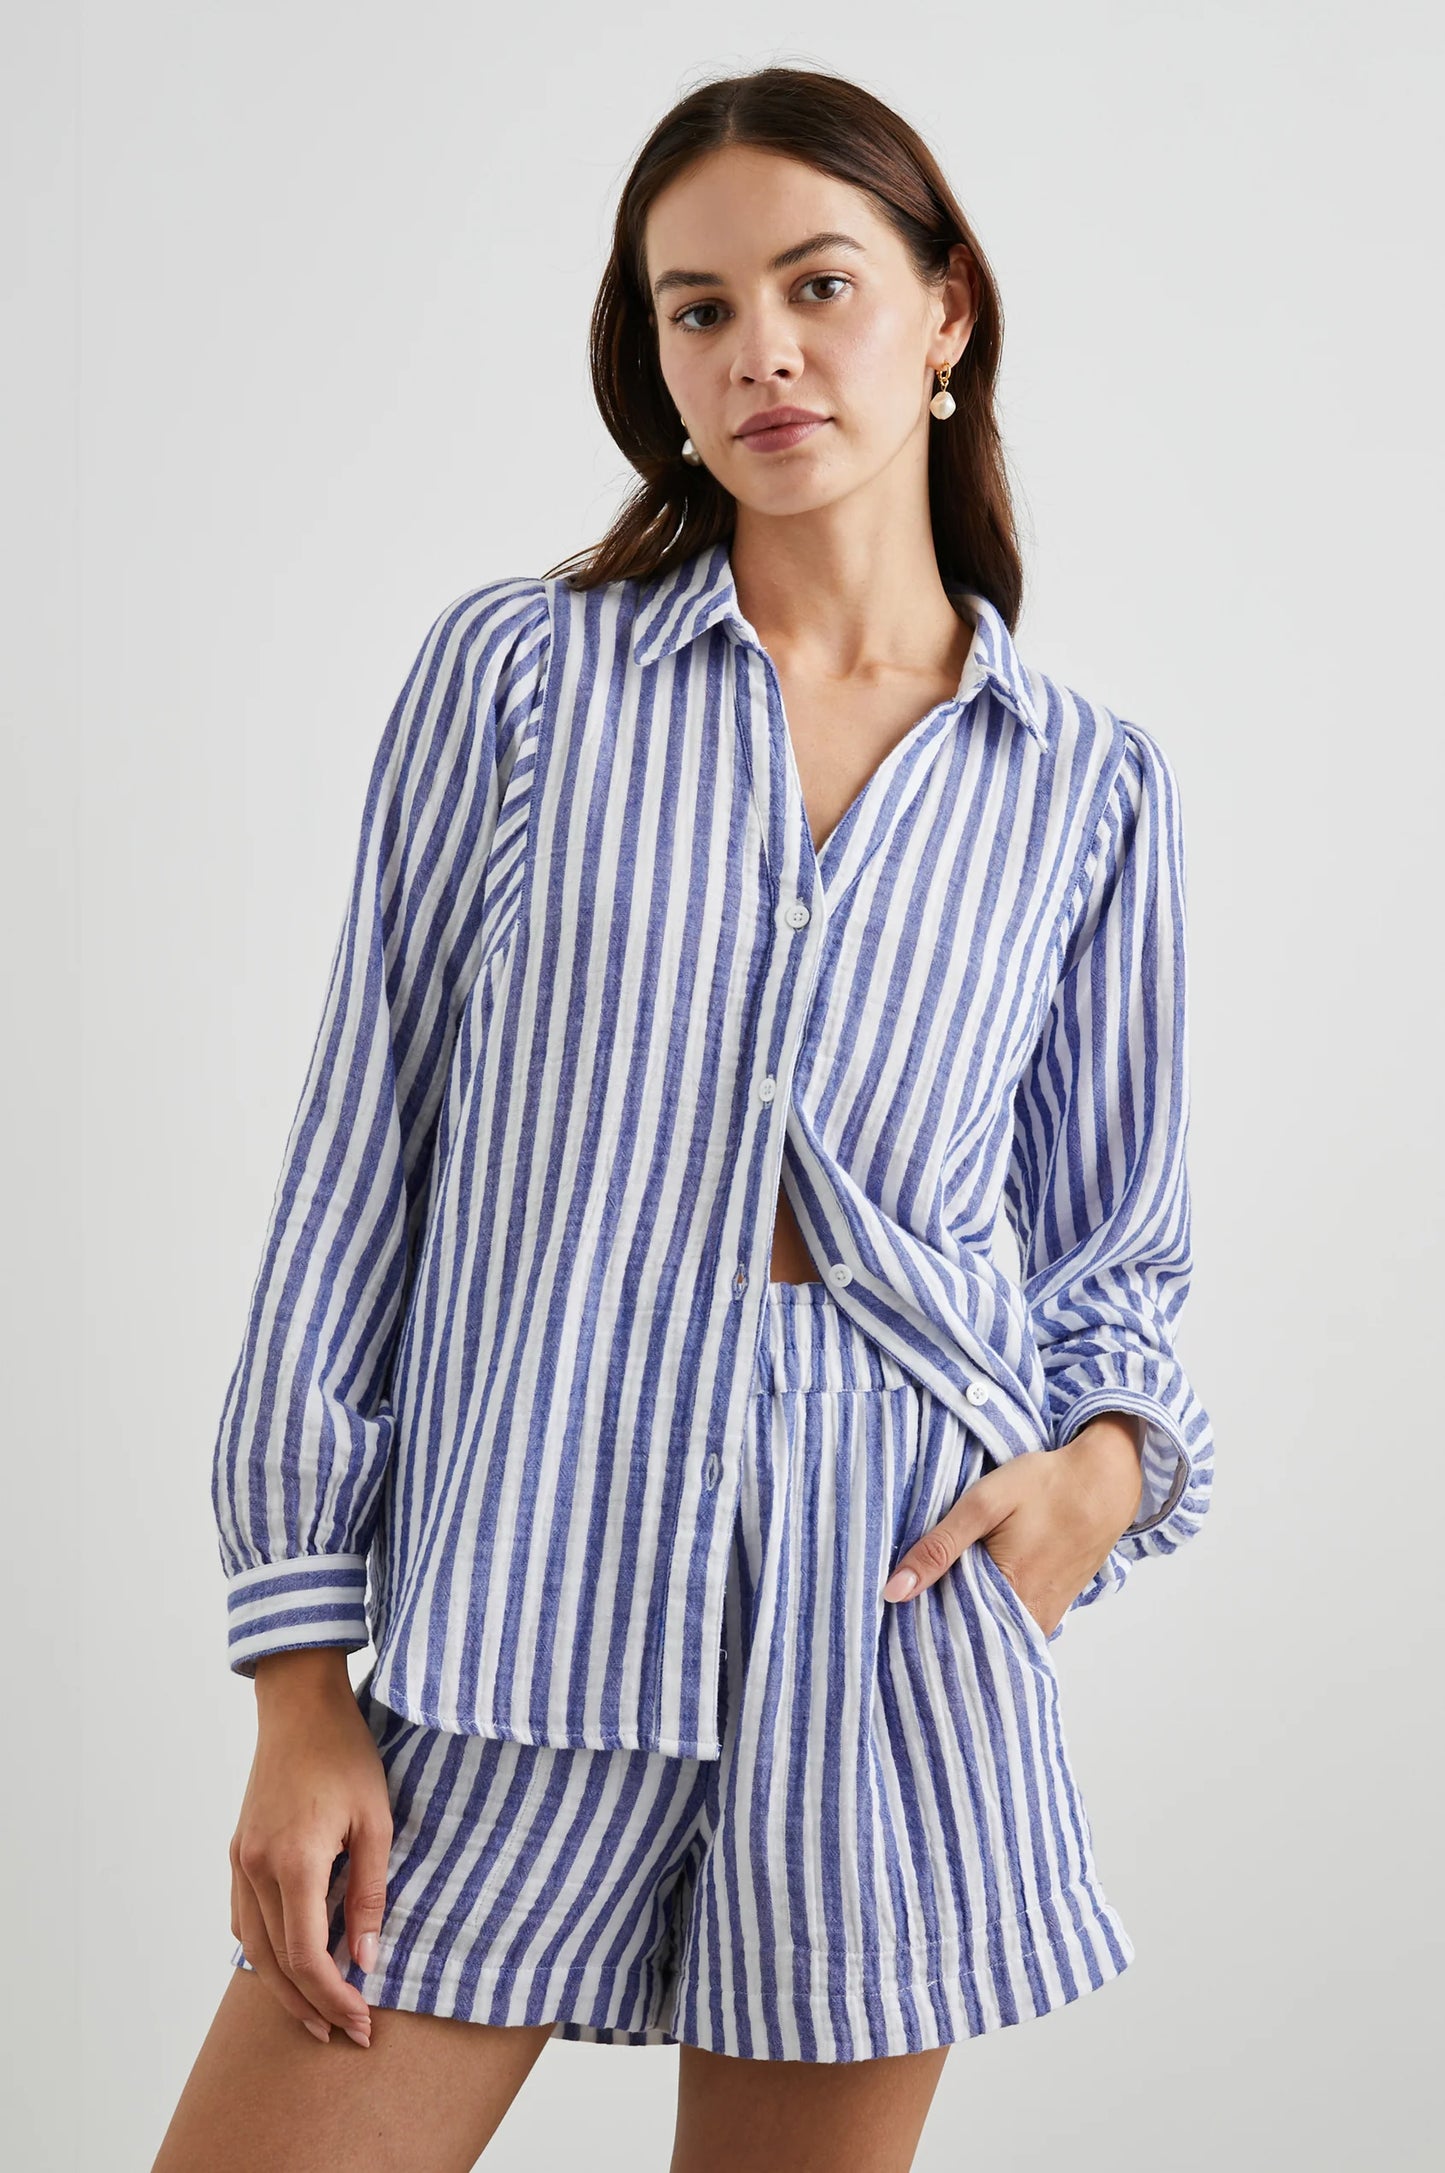 The Anacapa Stripe Lo Shirt by Rails